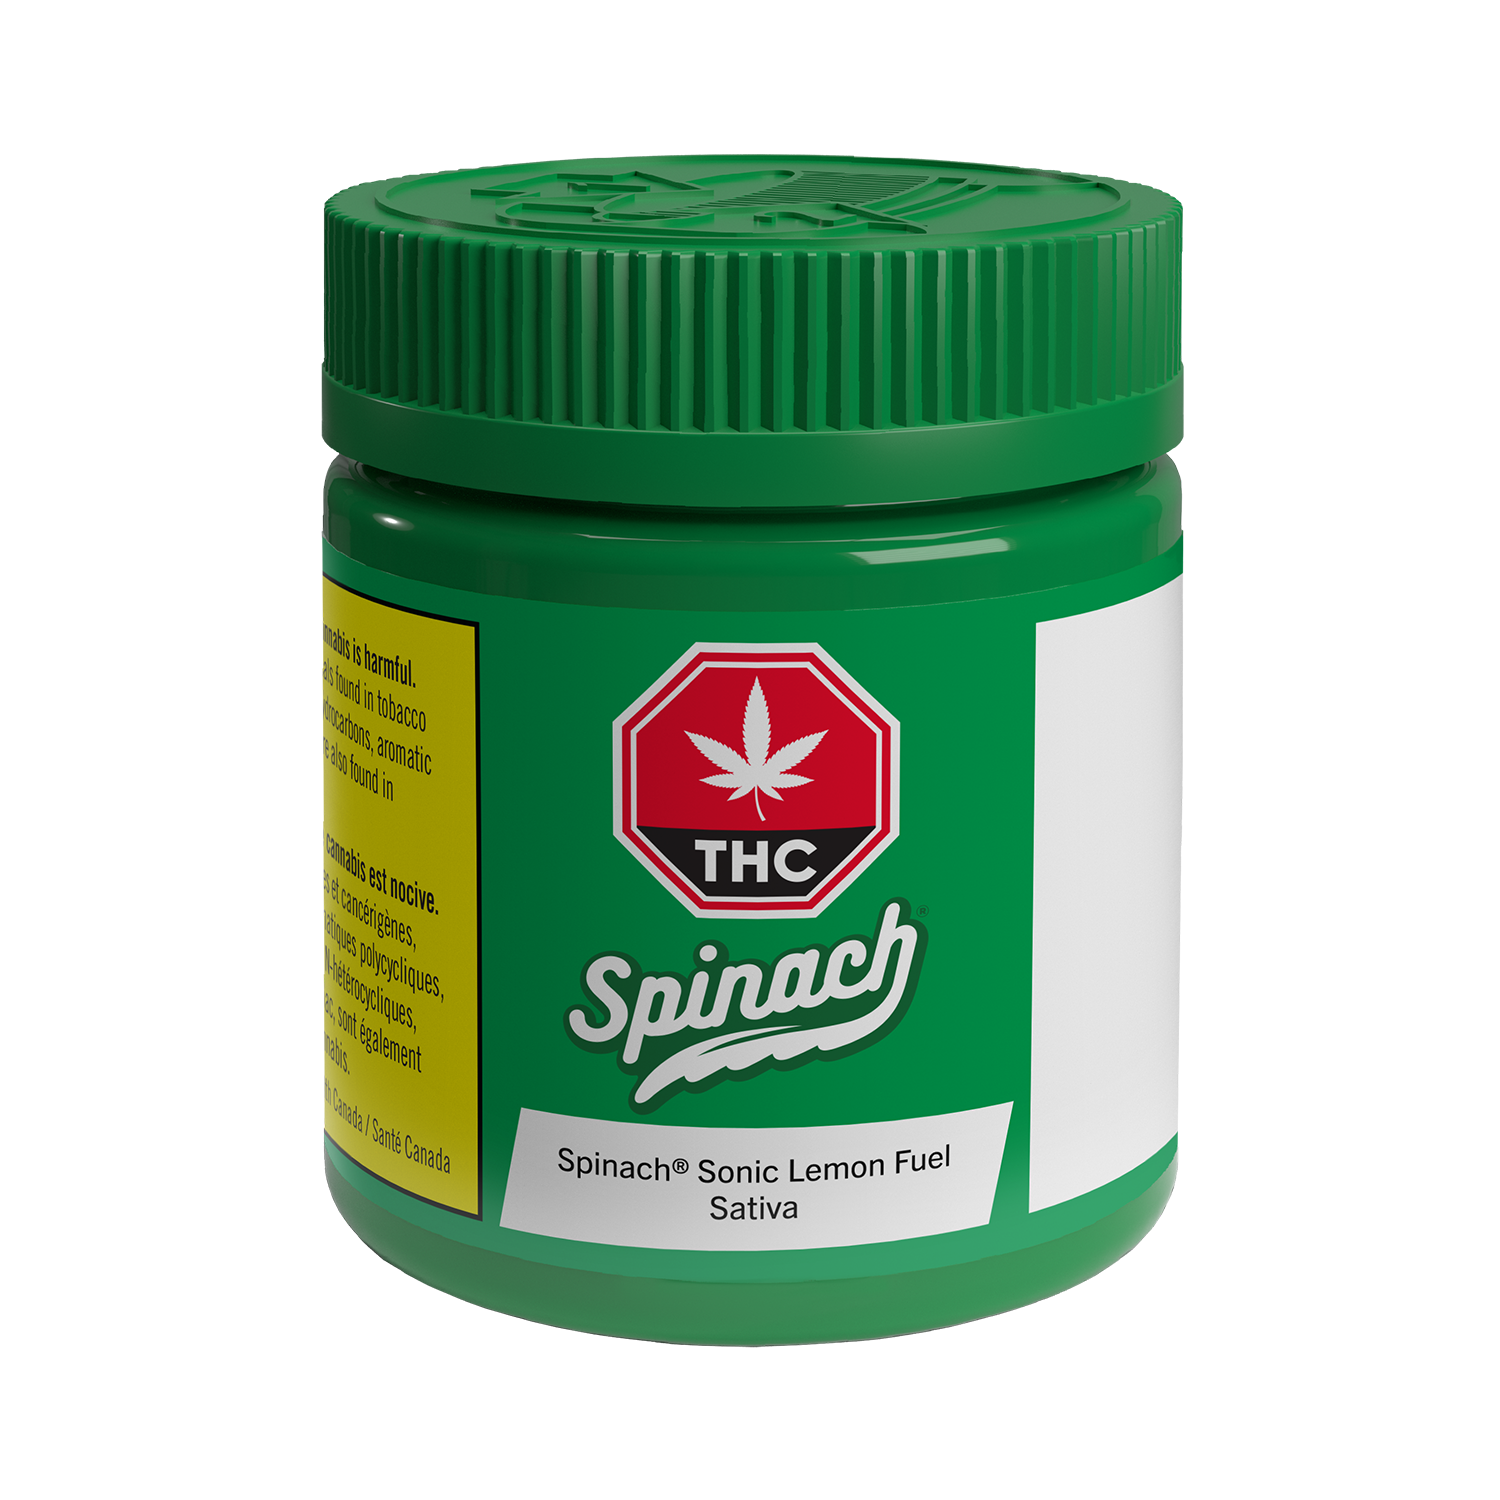 Spinach Sonic Lemon Fuel